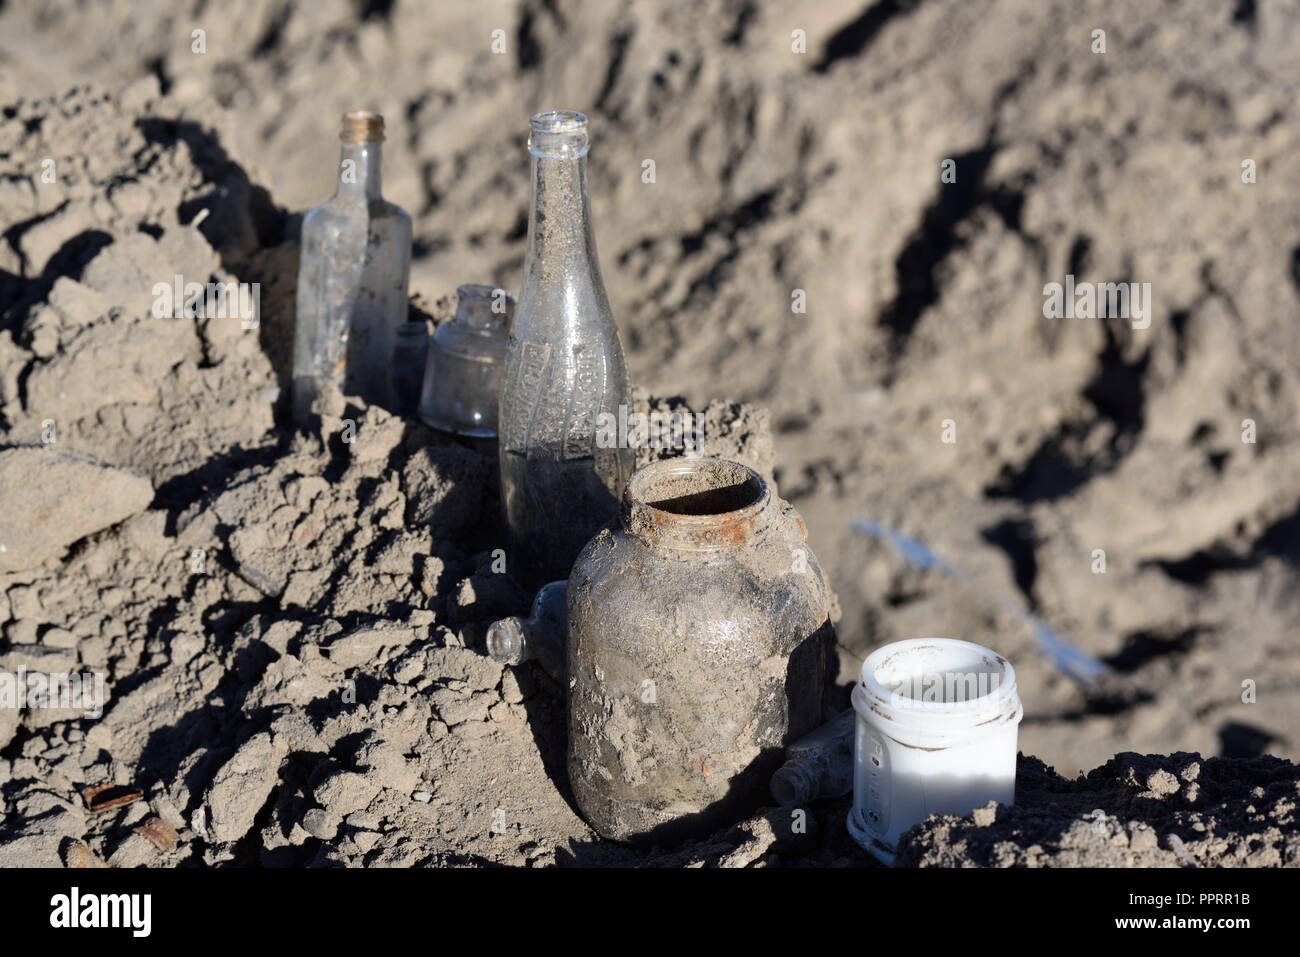 Antique bottles found in excavation pit Stock Photo